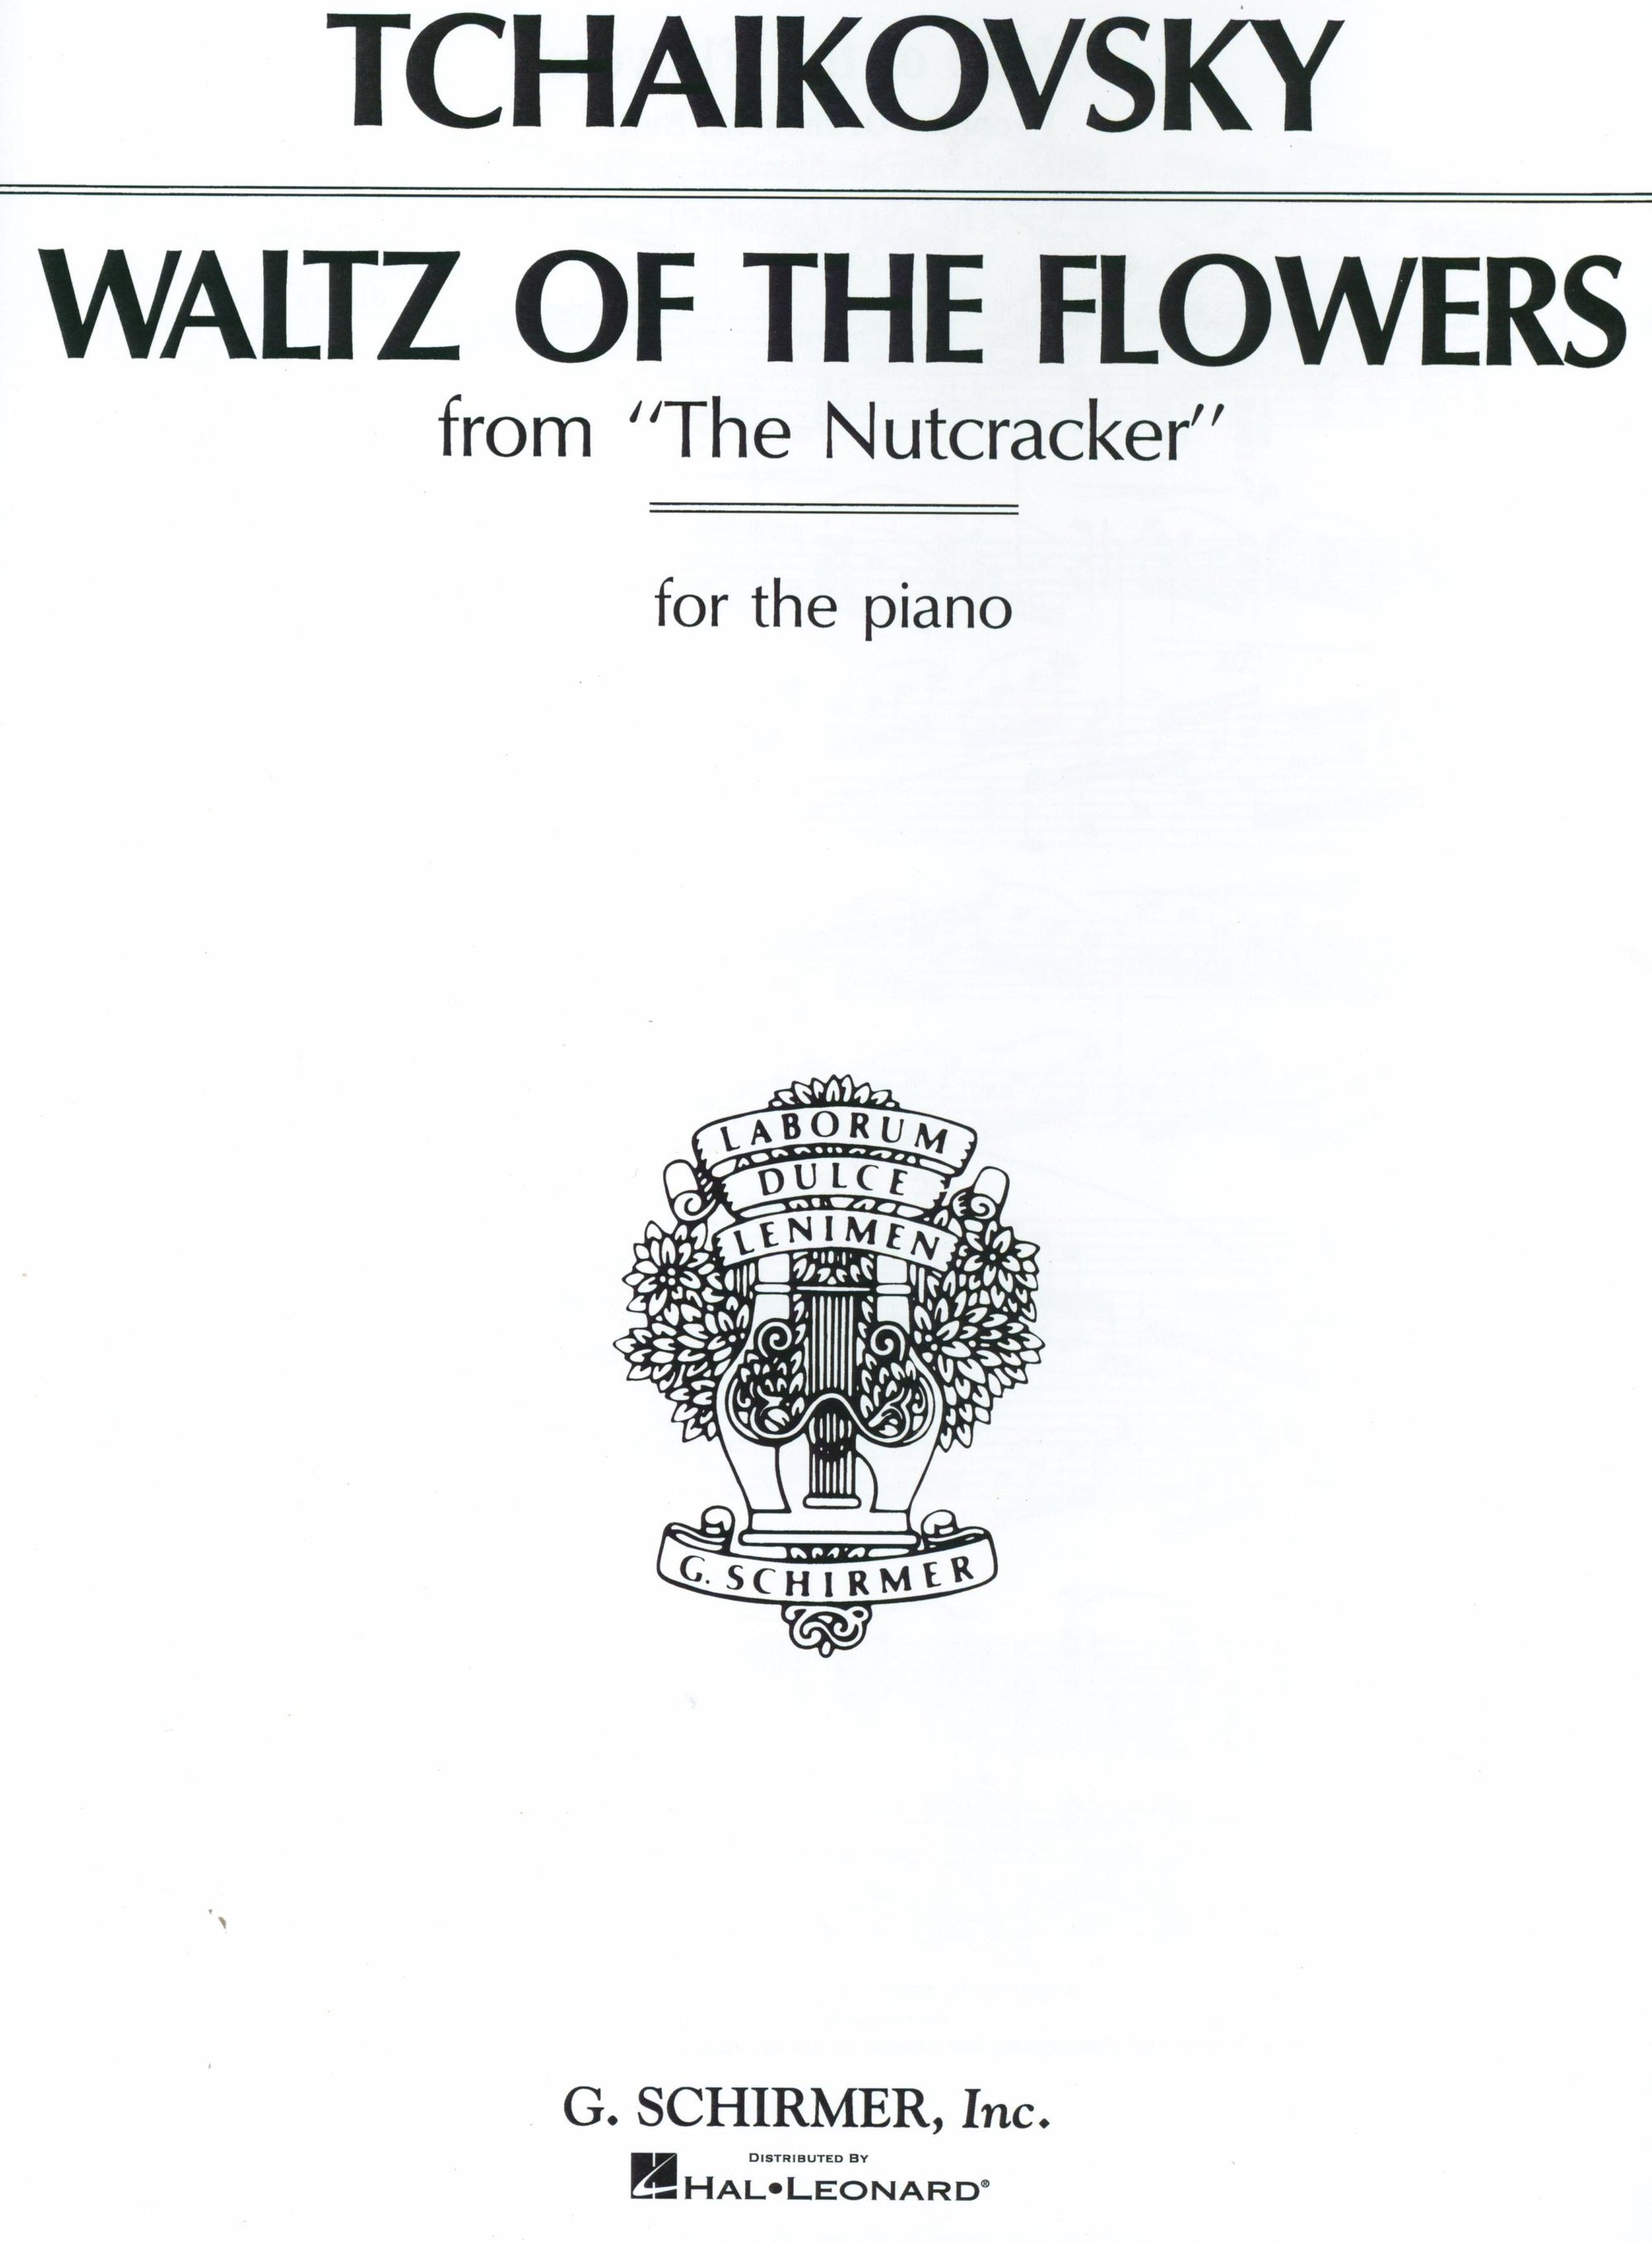 Tchaikovsky: Waltz of the Flowers from The Nutcracker